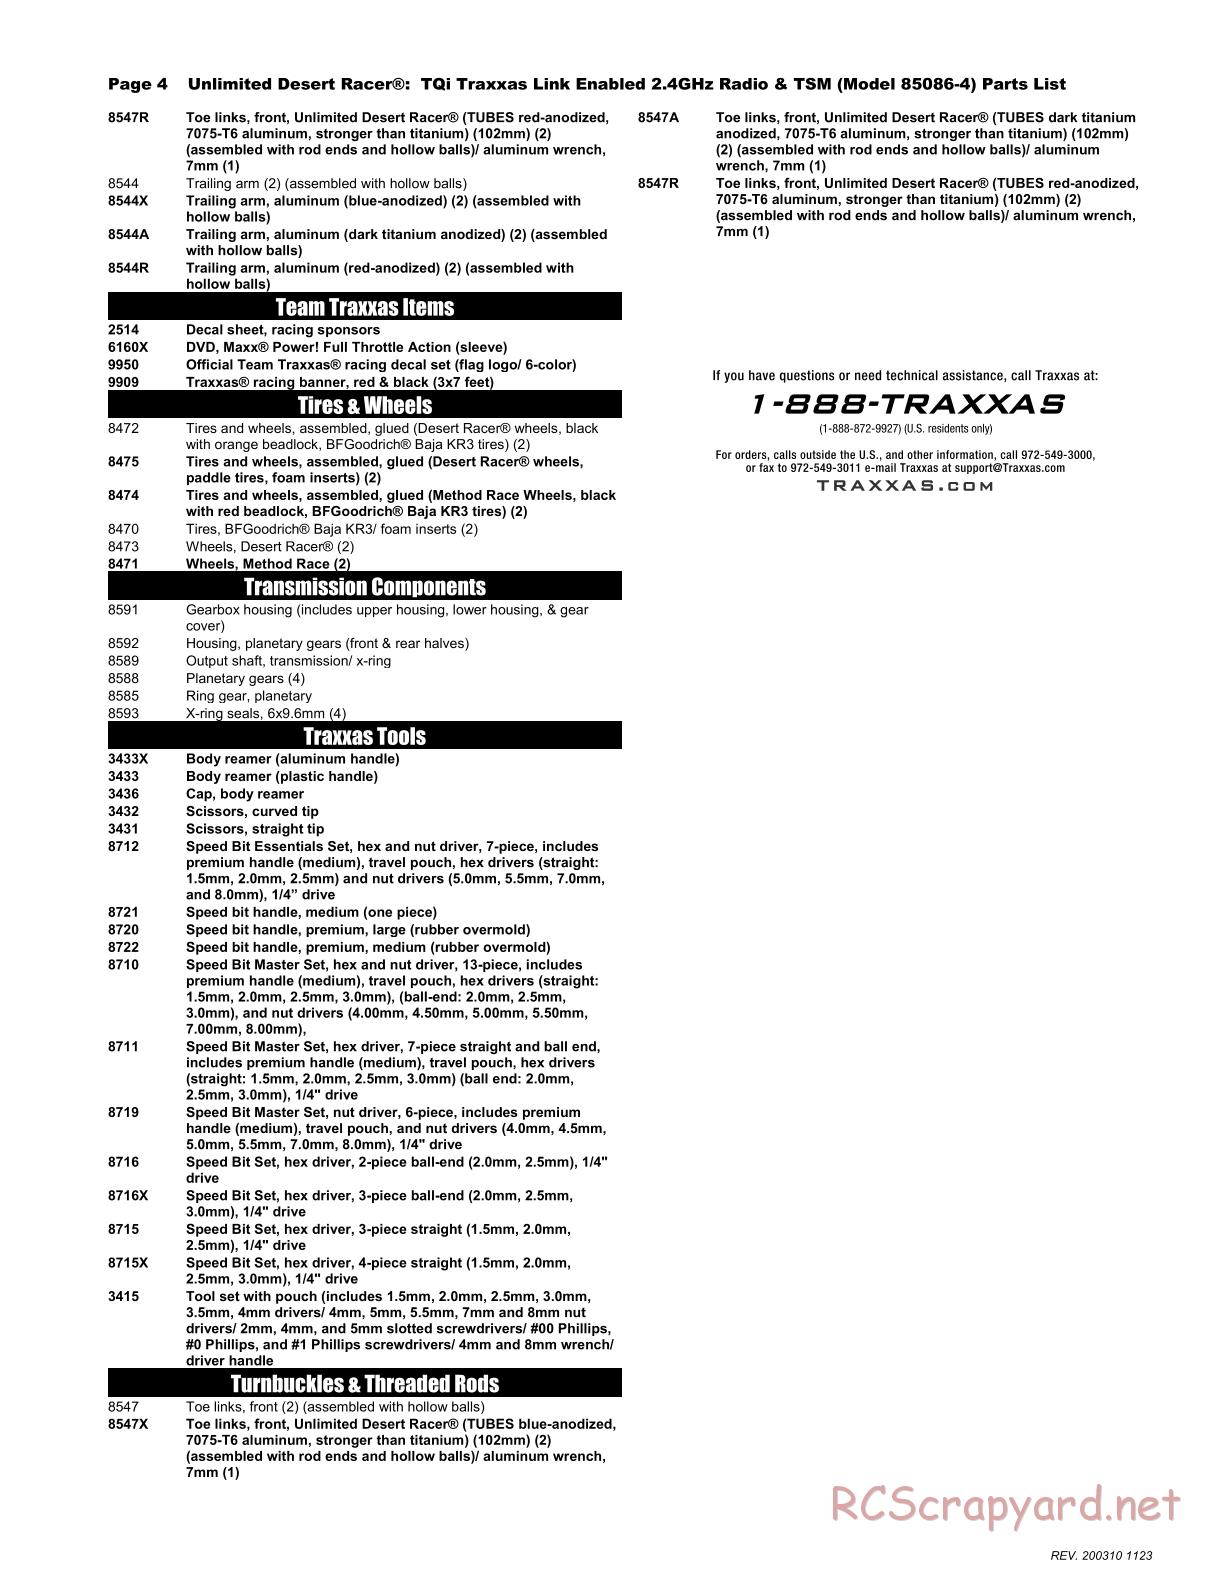 Traxxas - Unlimited Desert Racer VXL TSM - Parts List - Page 4